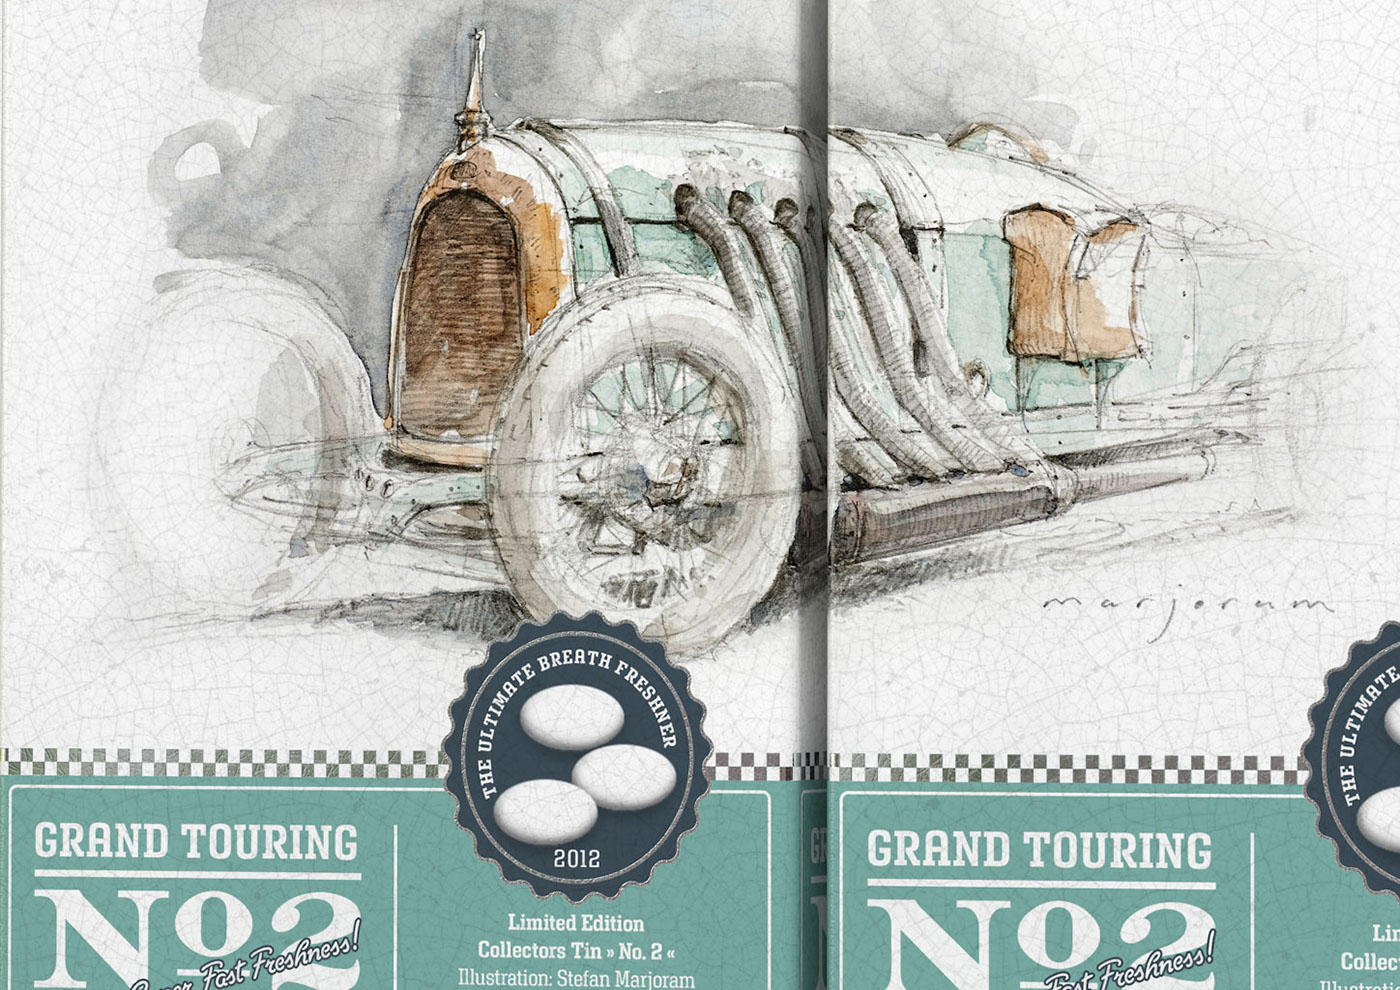 Stefan Marjoram Marcel Buerkle visualization design watercolour illustrations Graphic designs 3D renders peppermints tin box Grand Touring south africa Sports Cars vintage